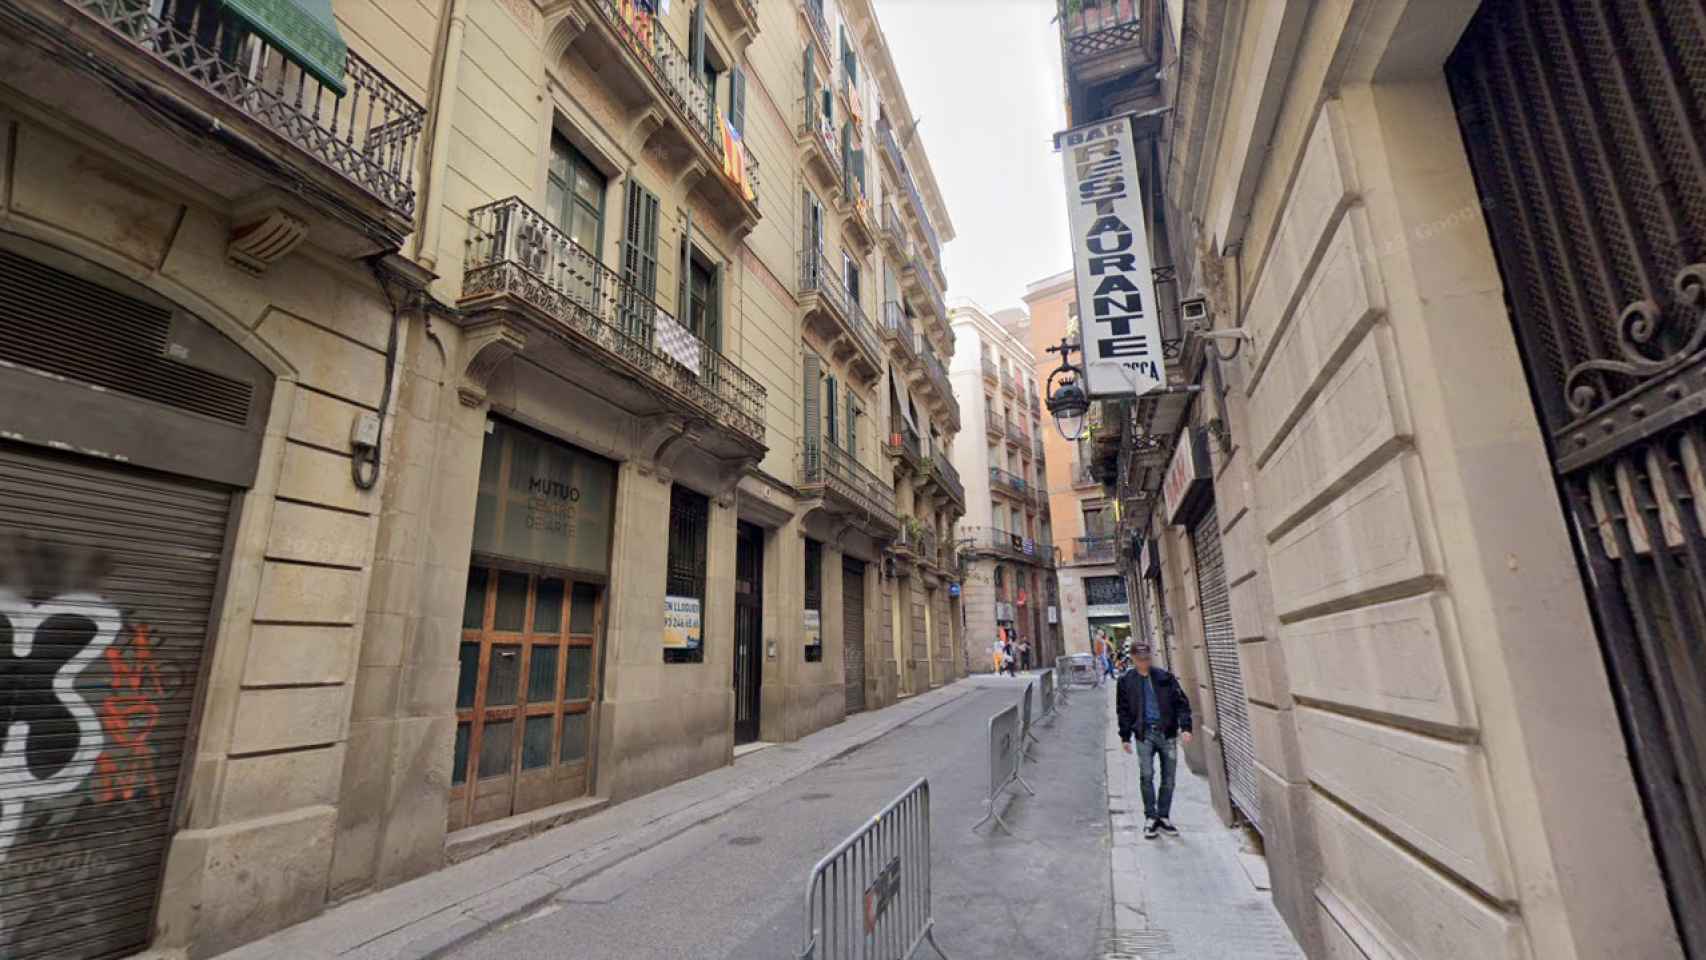 Sede del Club de Ajedrez Barcelona, en el número 5 de la calle Julià Portet